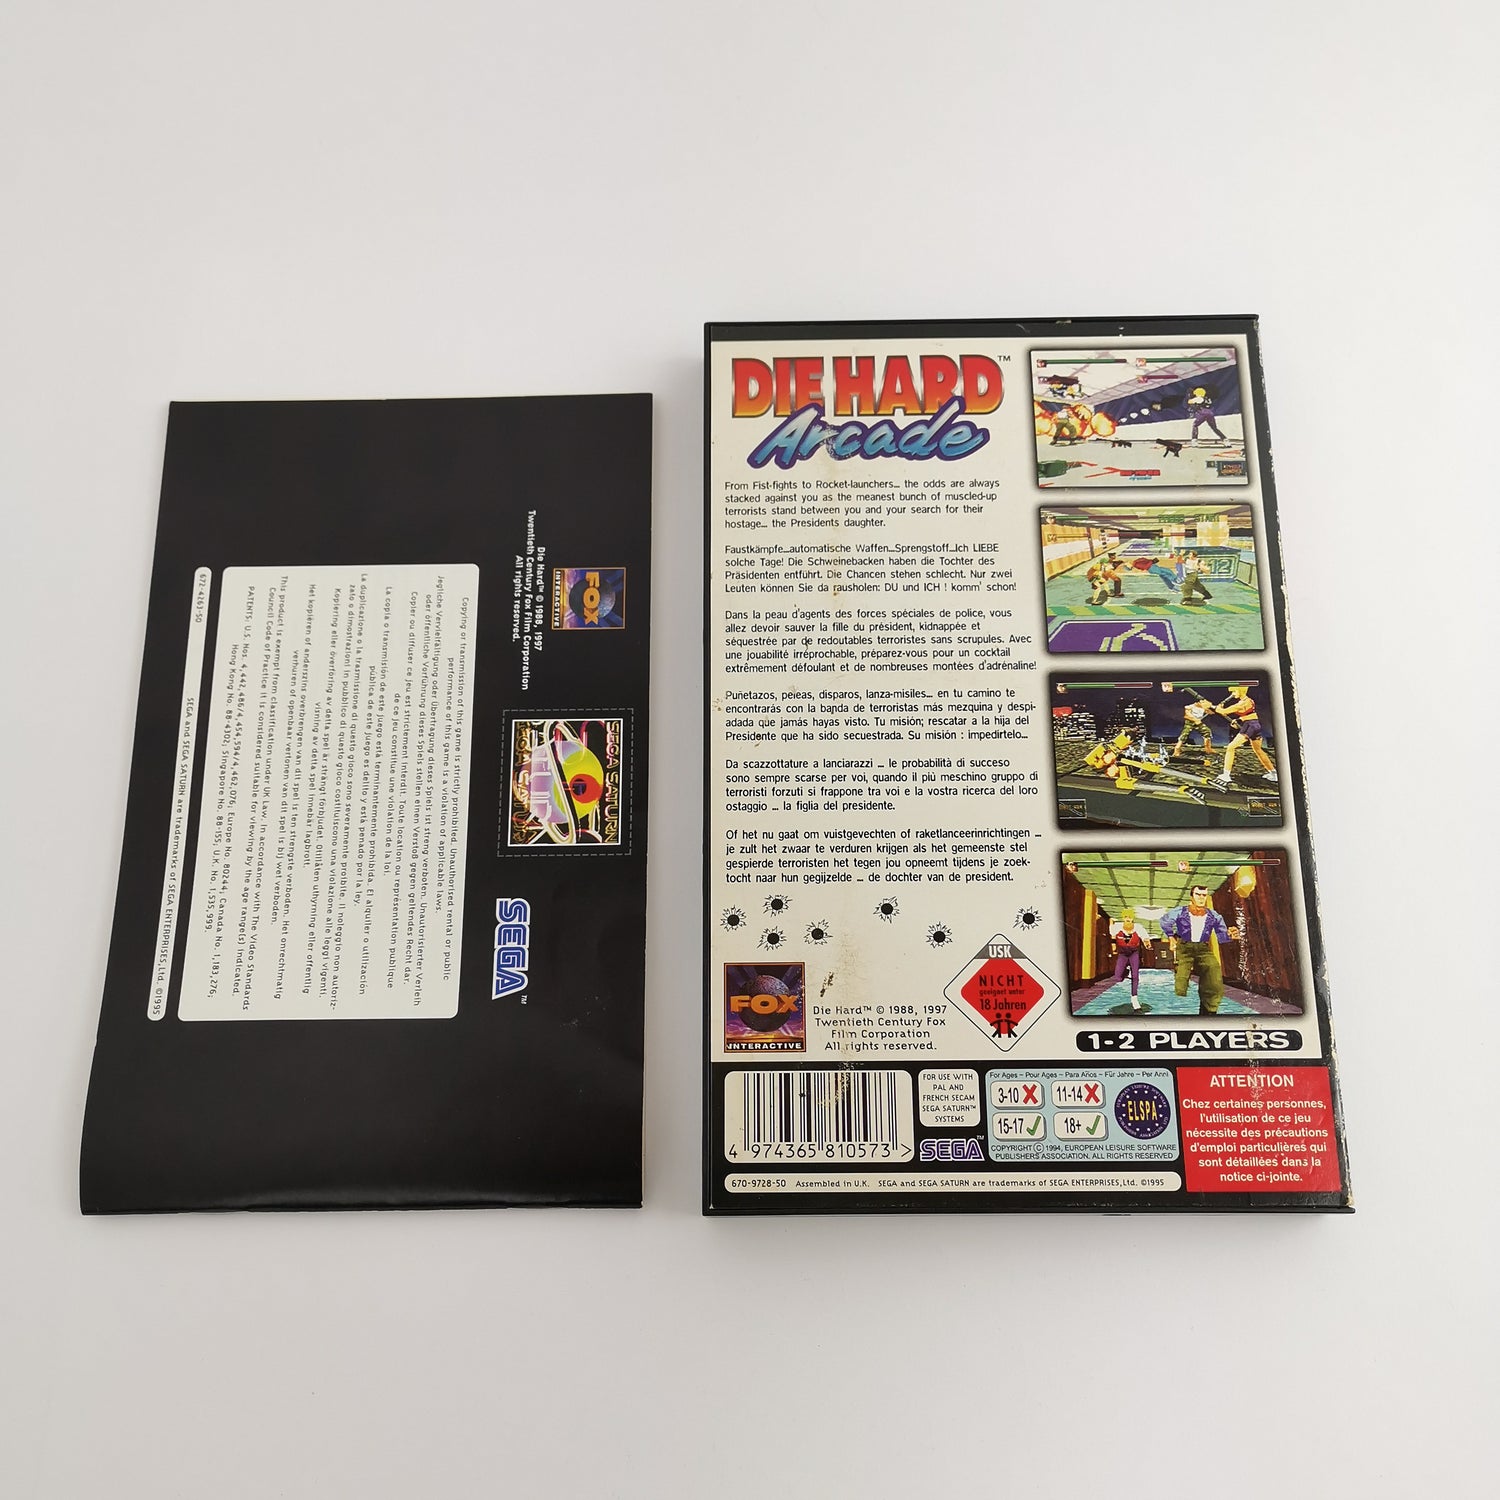 Sega Saturn Game: Die Hard Arcade - Original Packaging & Instructions | PAL version USK18